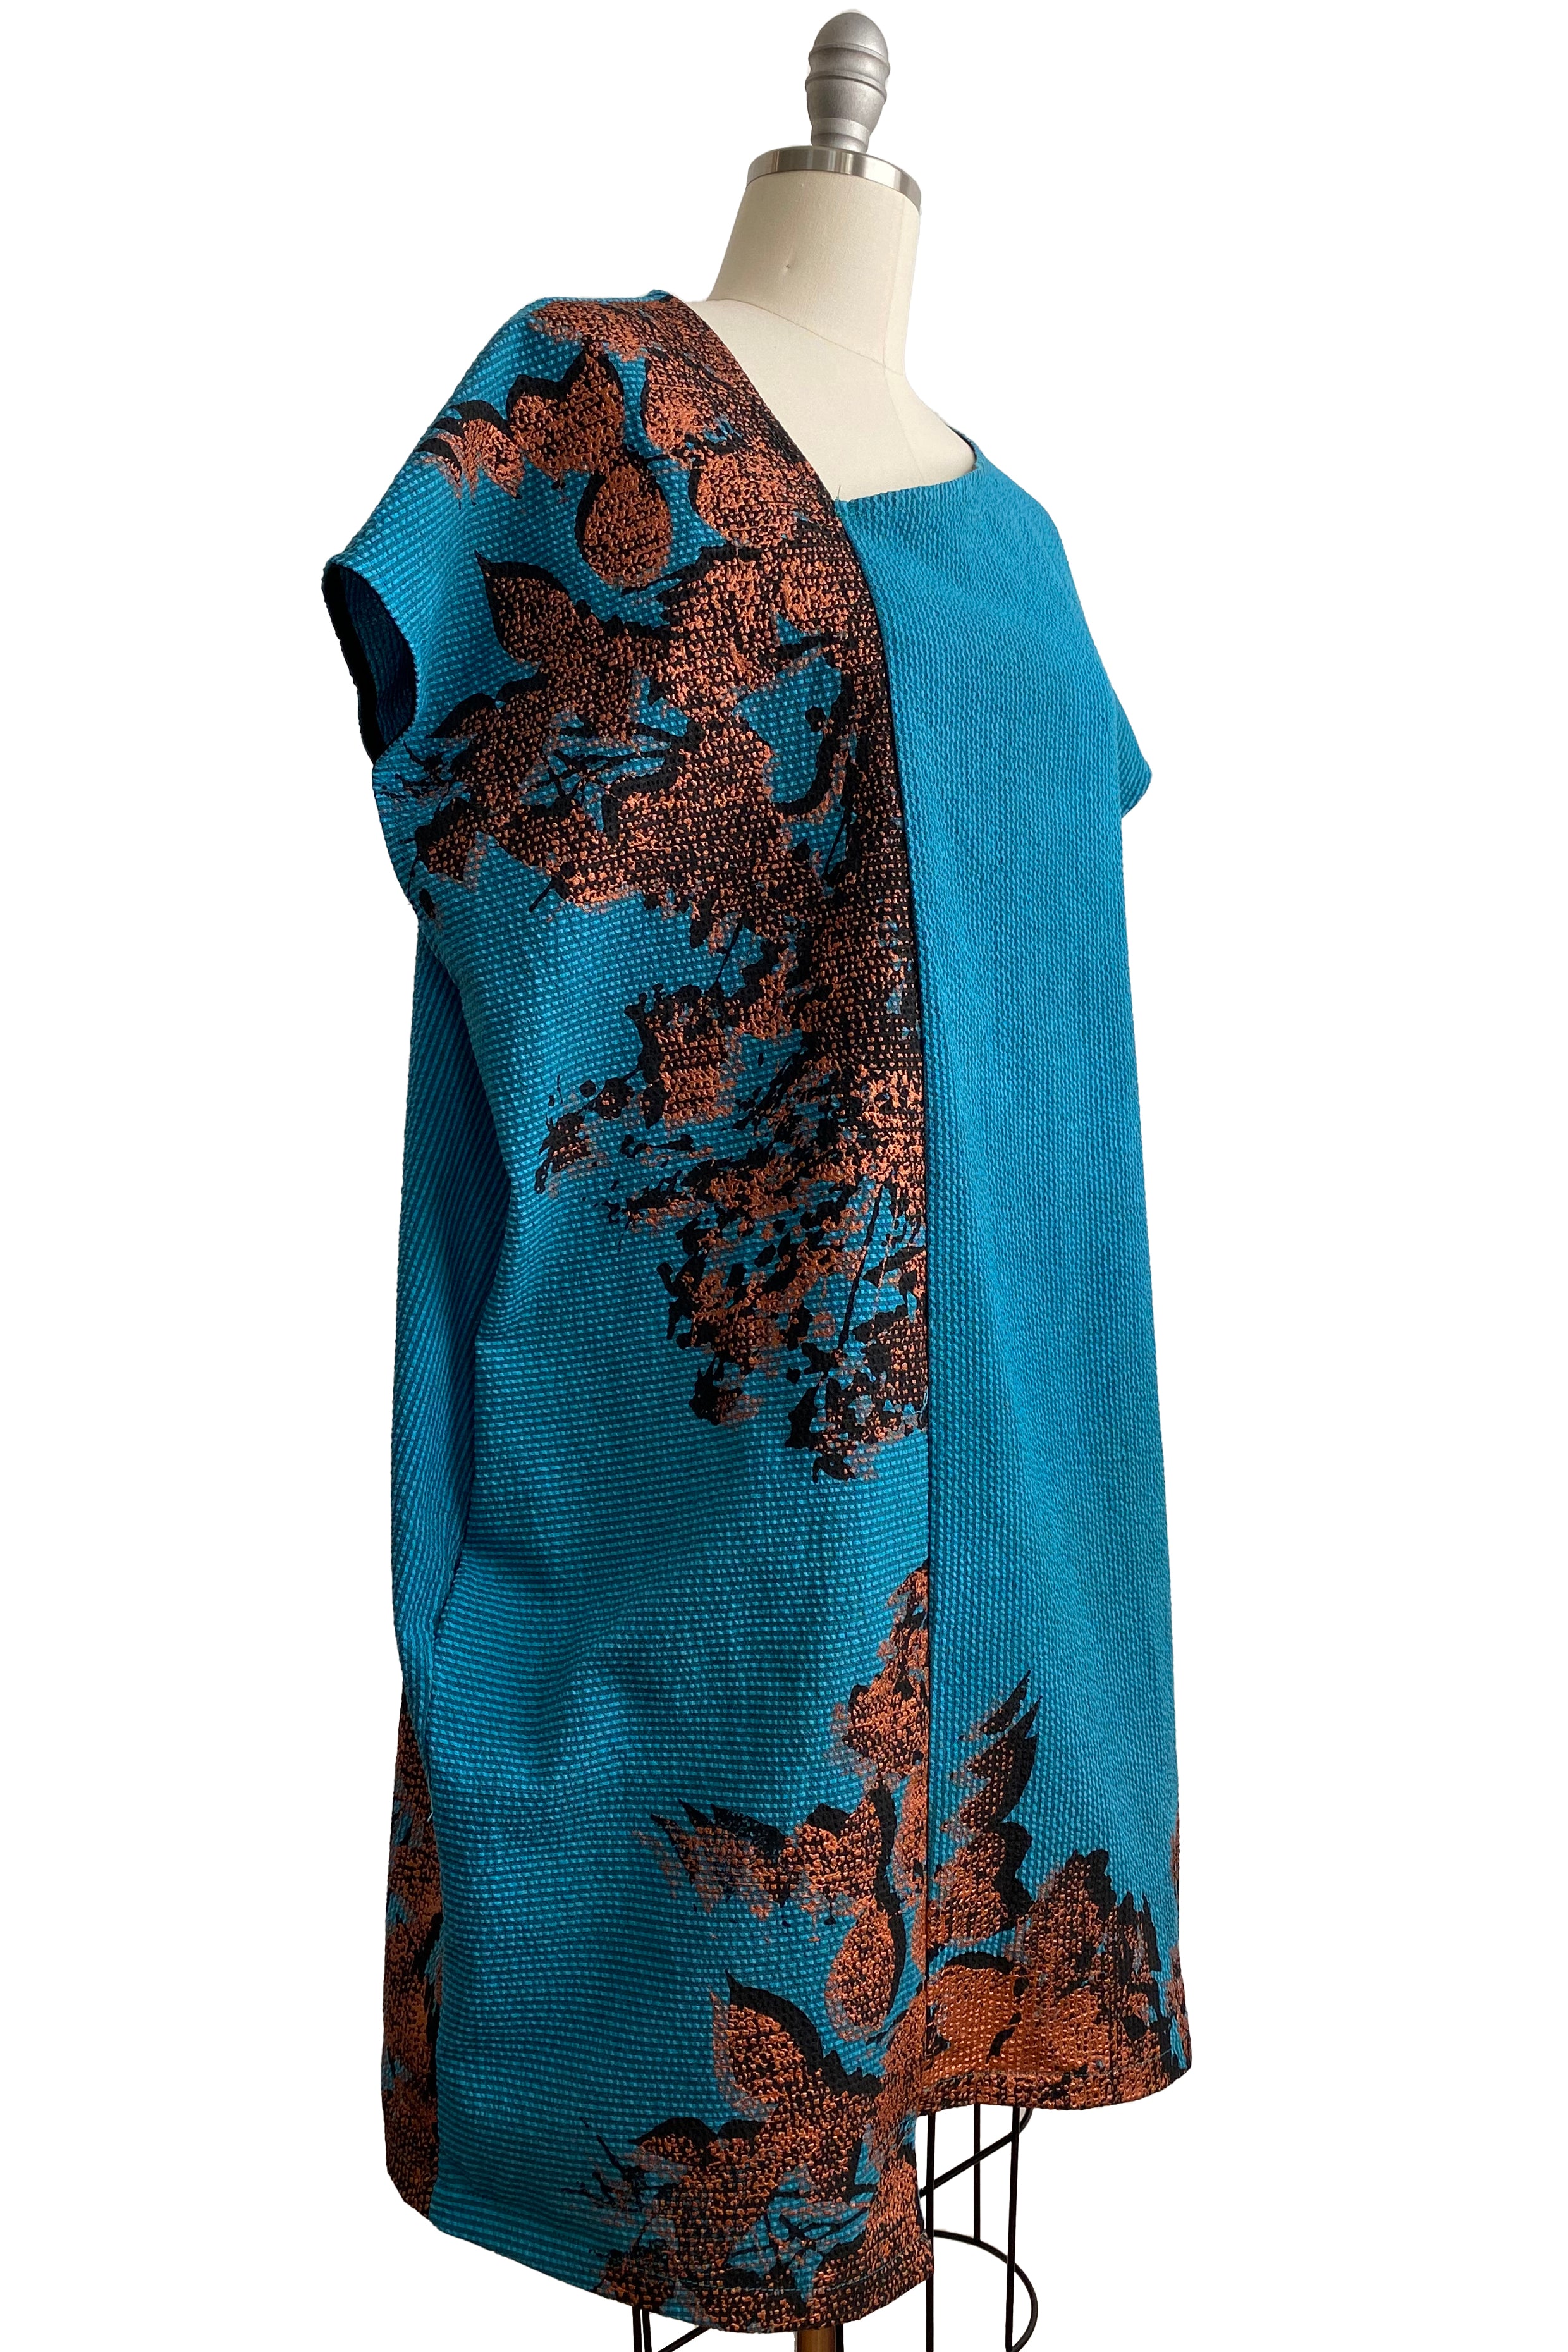 Petra Tunic w/ Bramble Print - Blue & Copper - Large